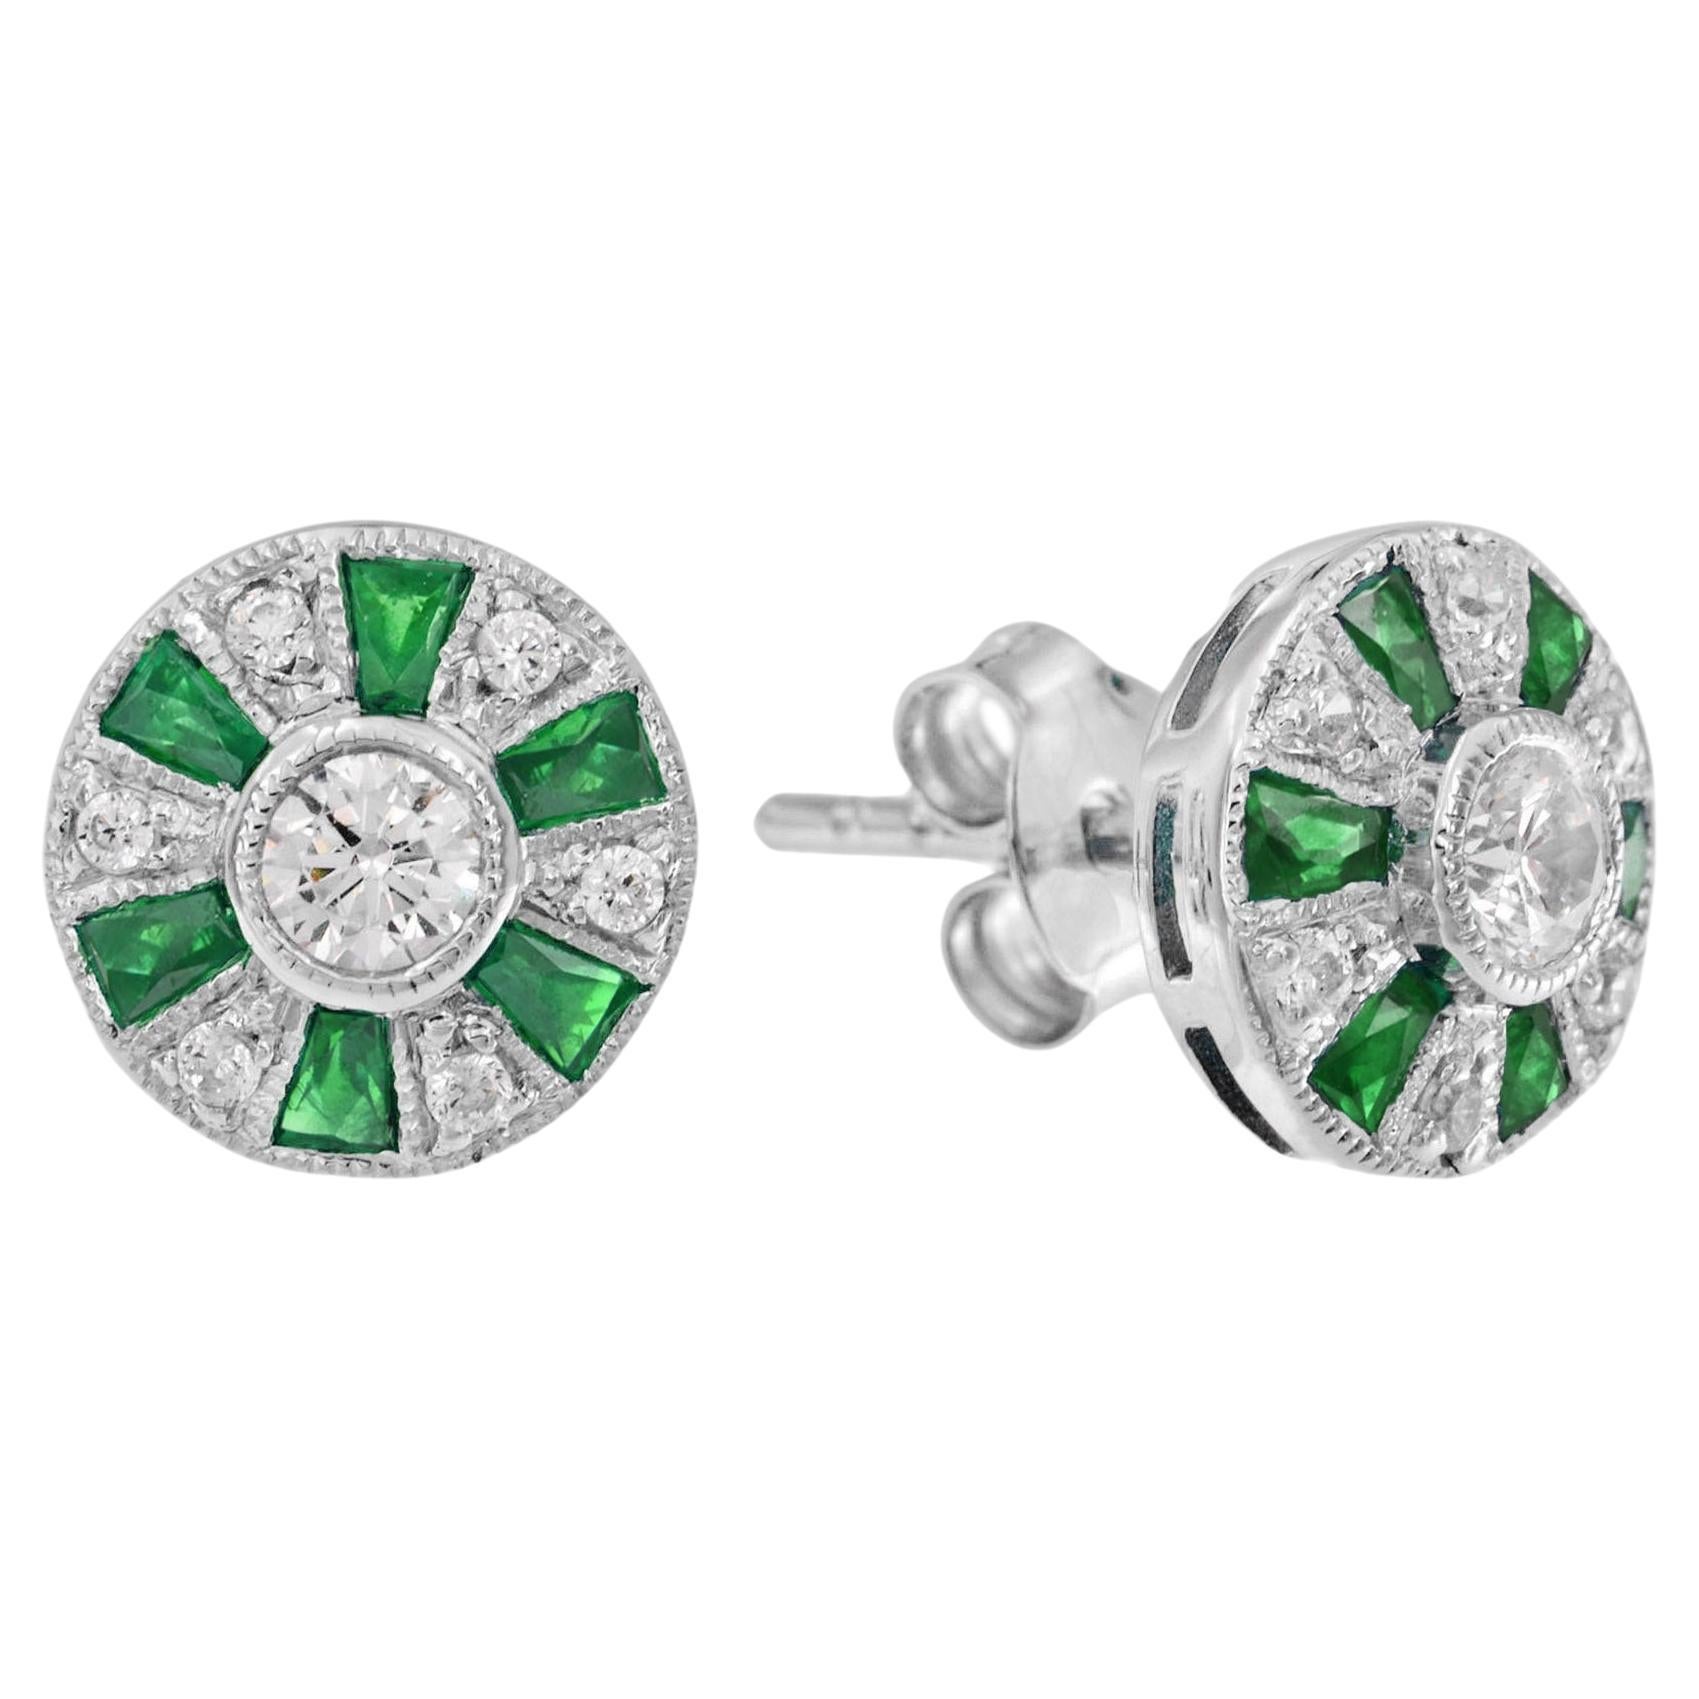 Ferris Wheel Diamond and French Cut Emerald Art Deco Style Earrings in 14K Gold For Sale